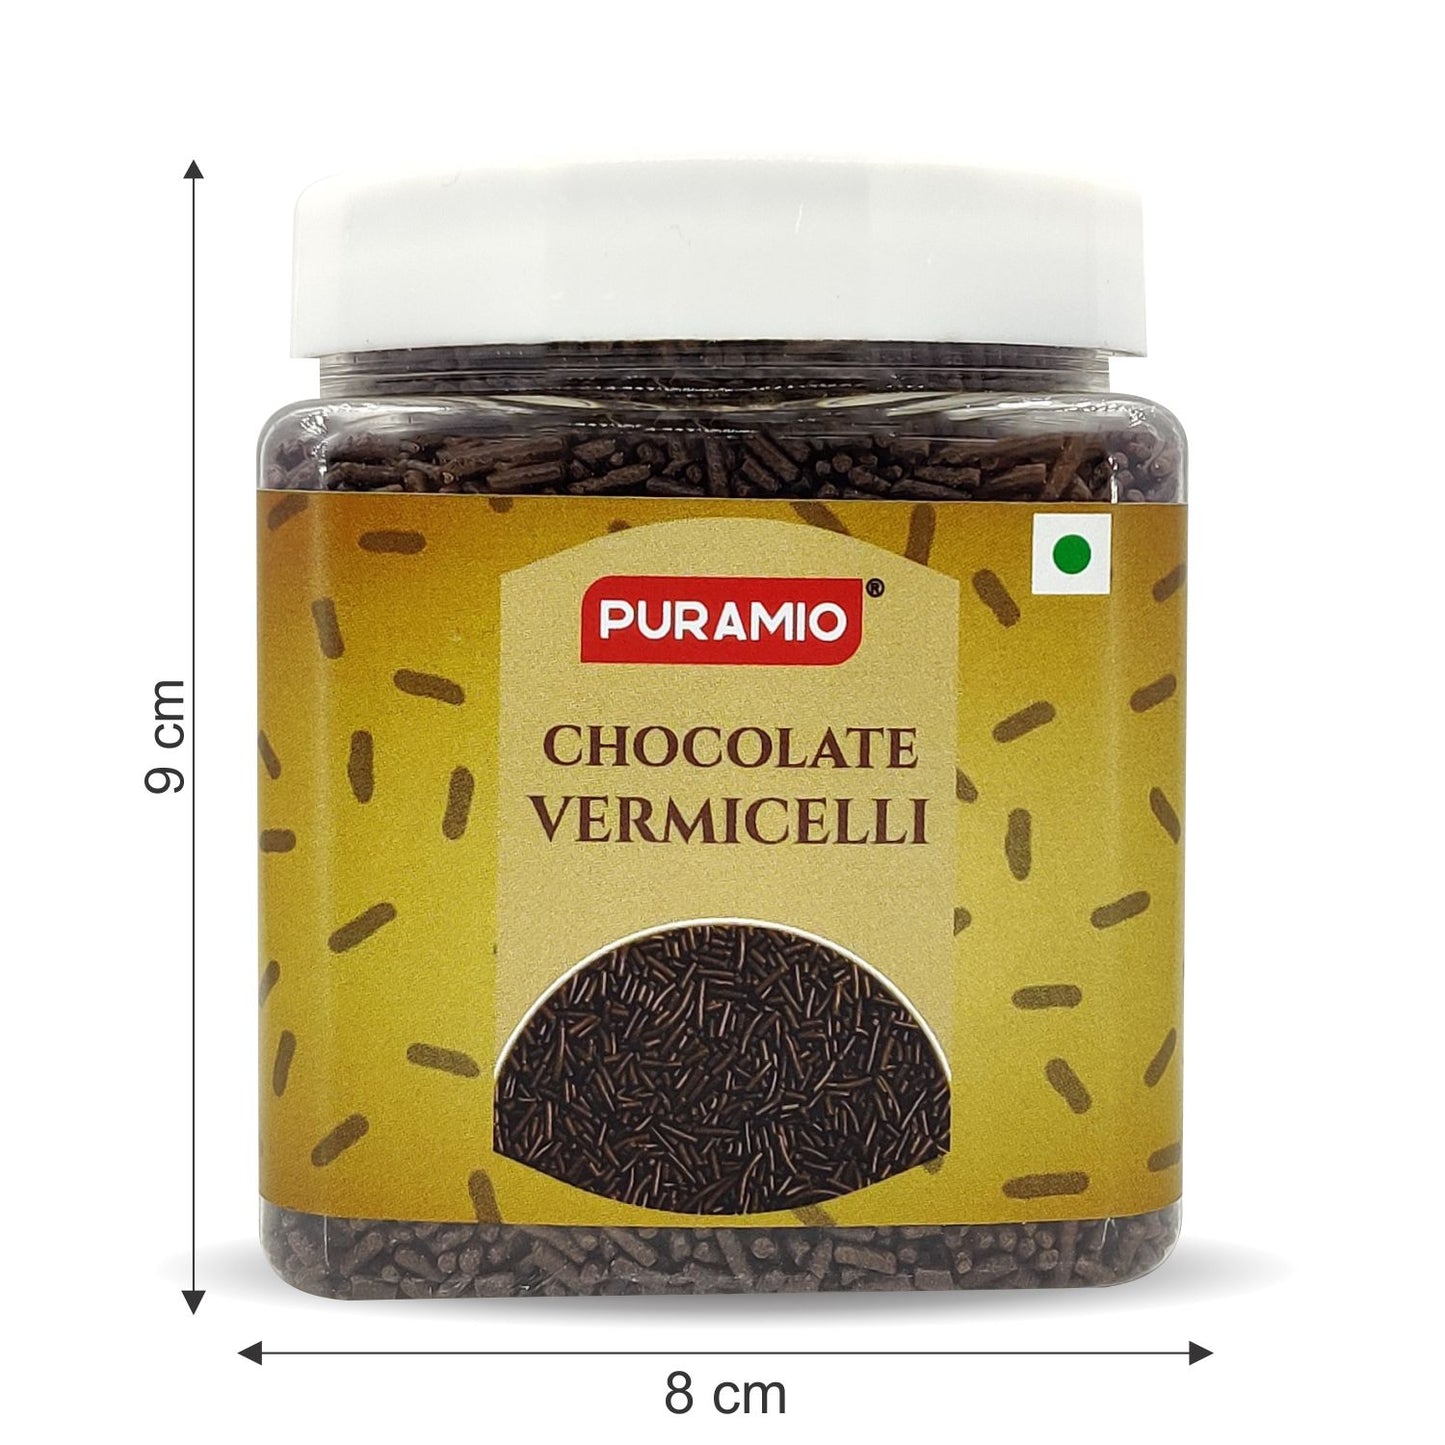 Puramio Chocolate Vermicelli